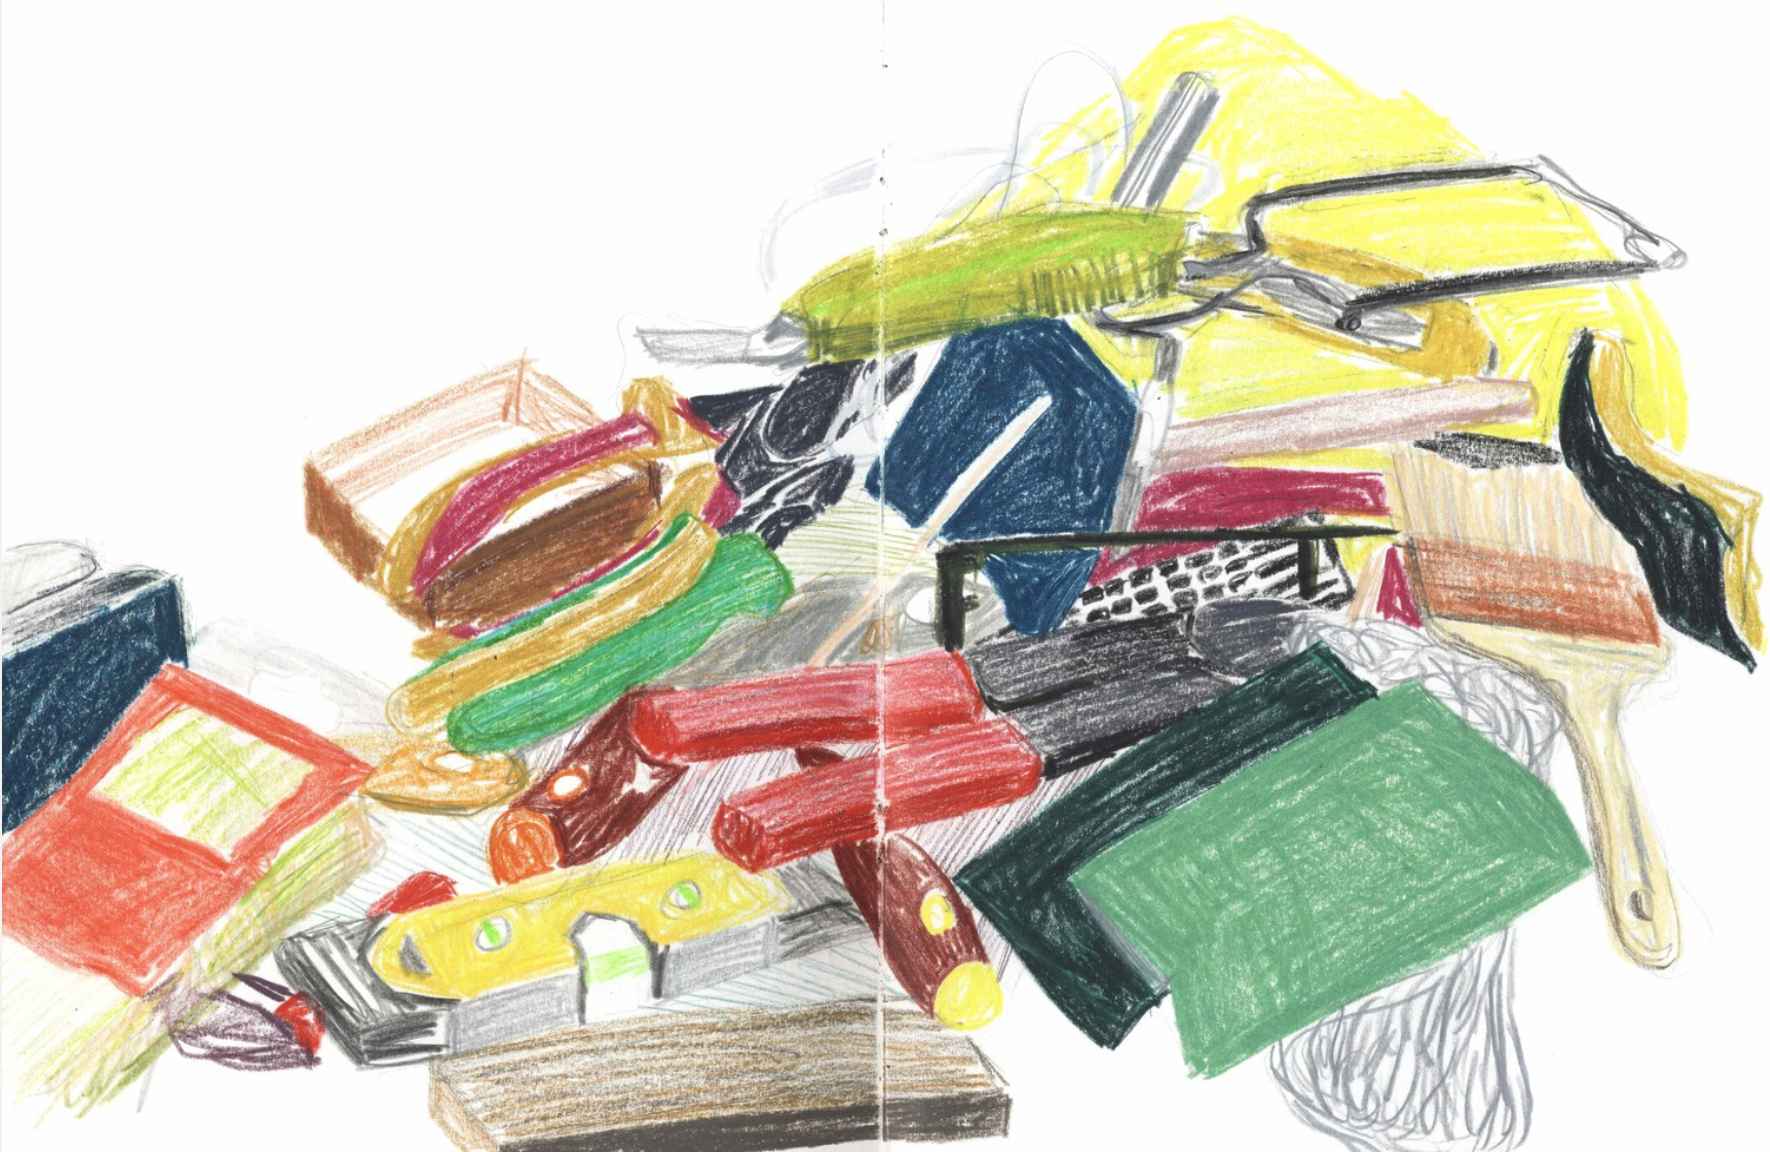   Tools ,&nbsp;2010 crayons on paper,&nbsp;sketchbook 29,7 x 42 cm    